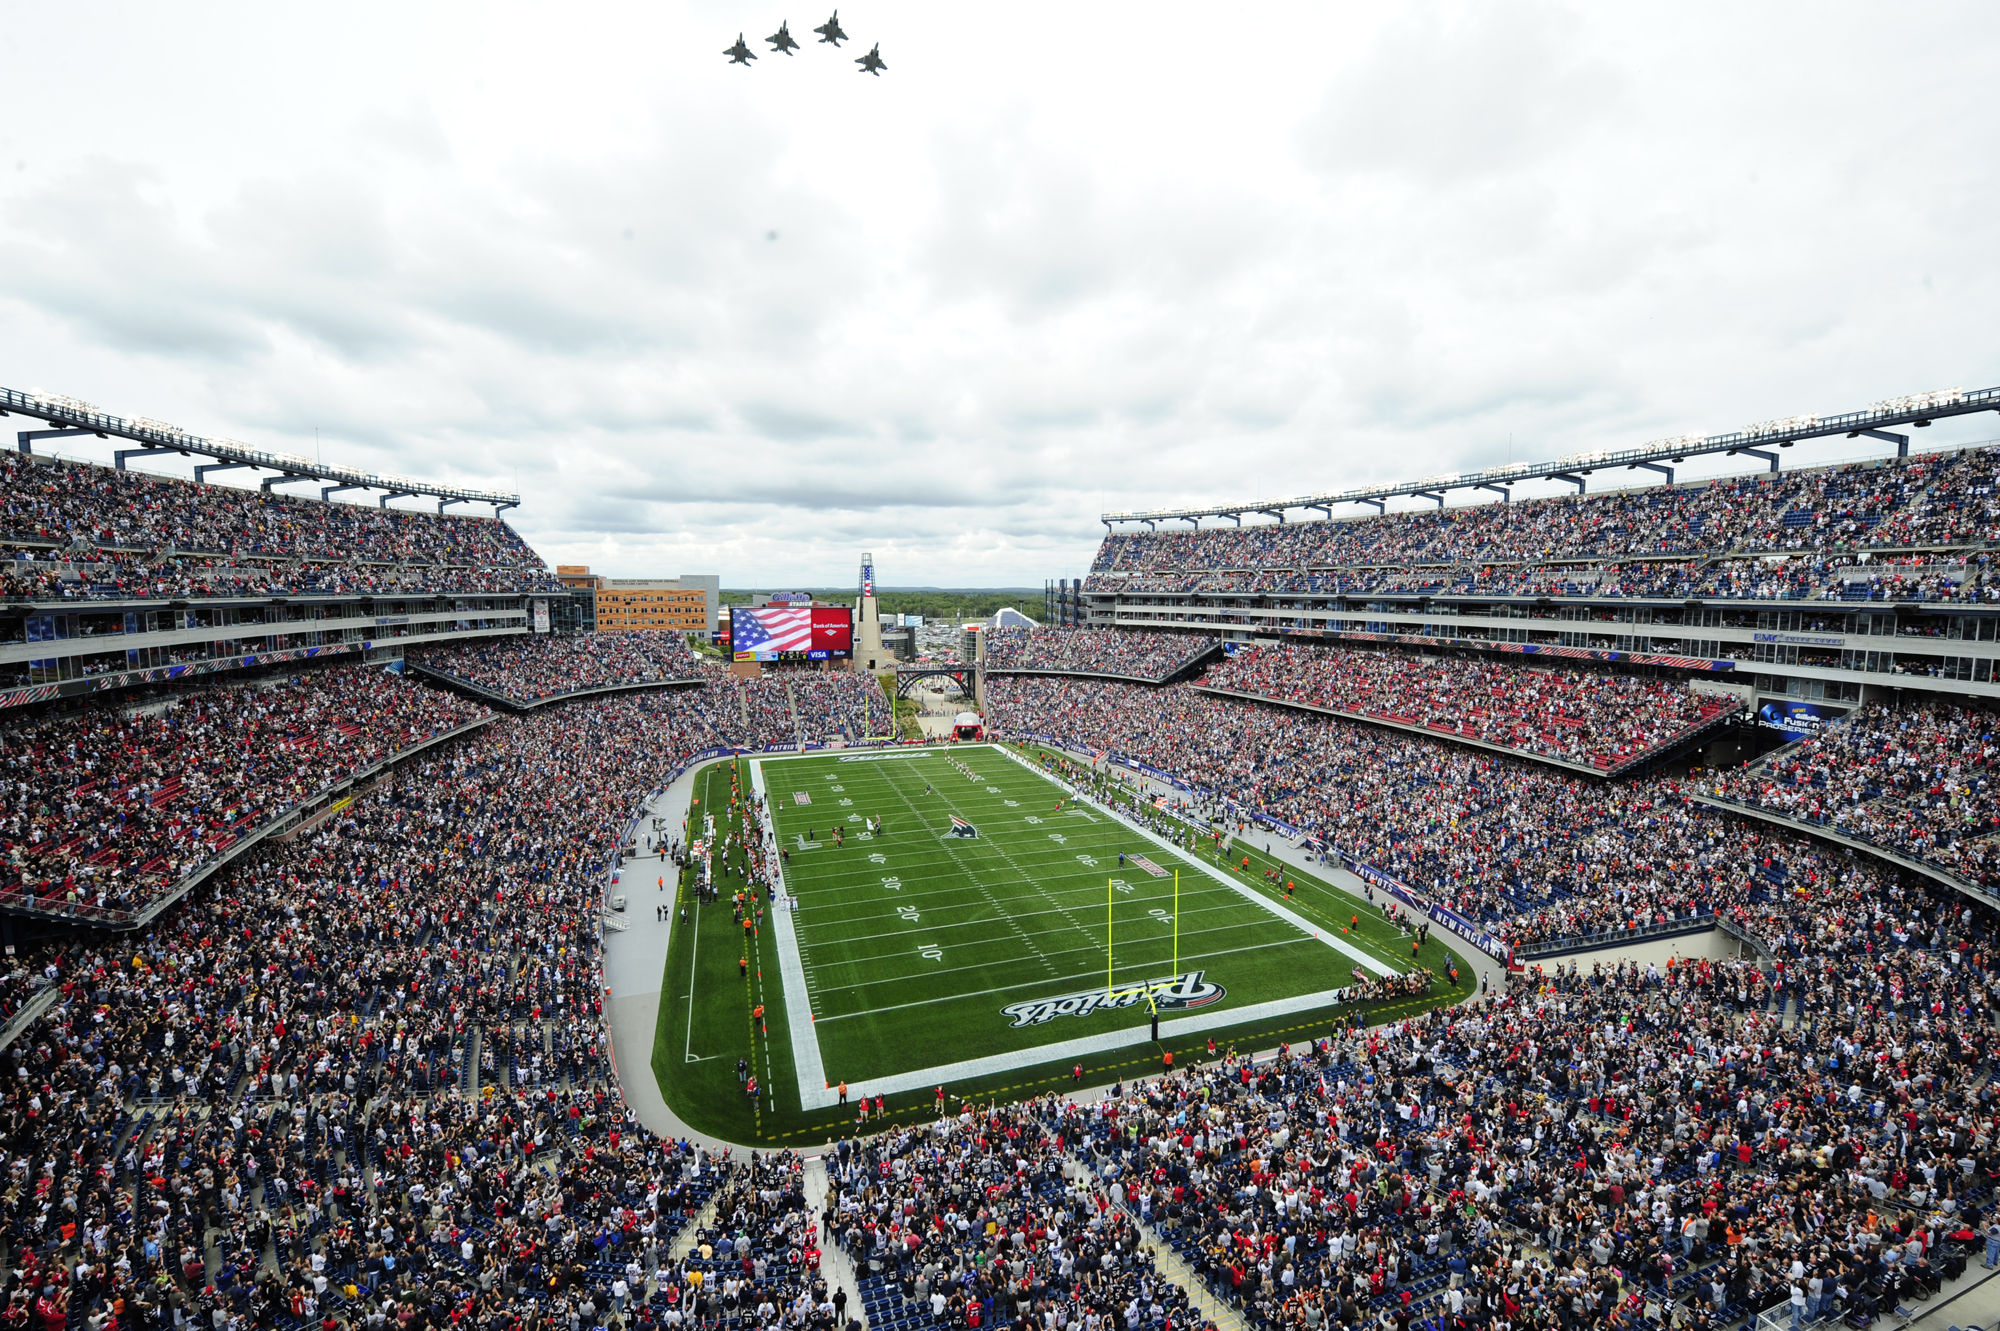 NFL: Next Season with Full Stadium Capacity?